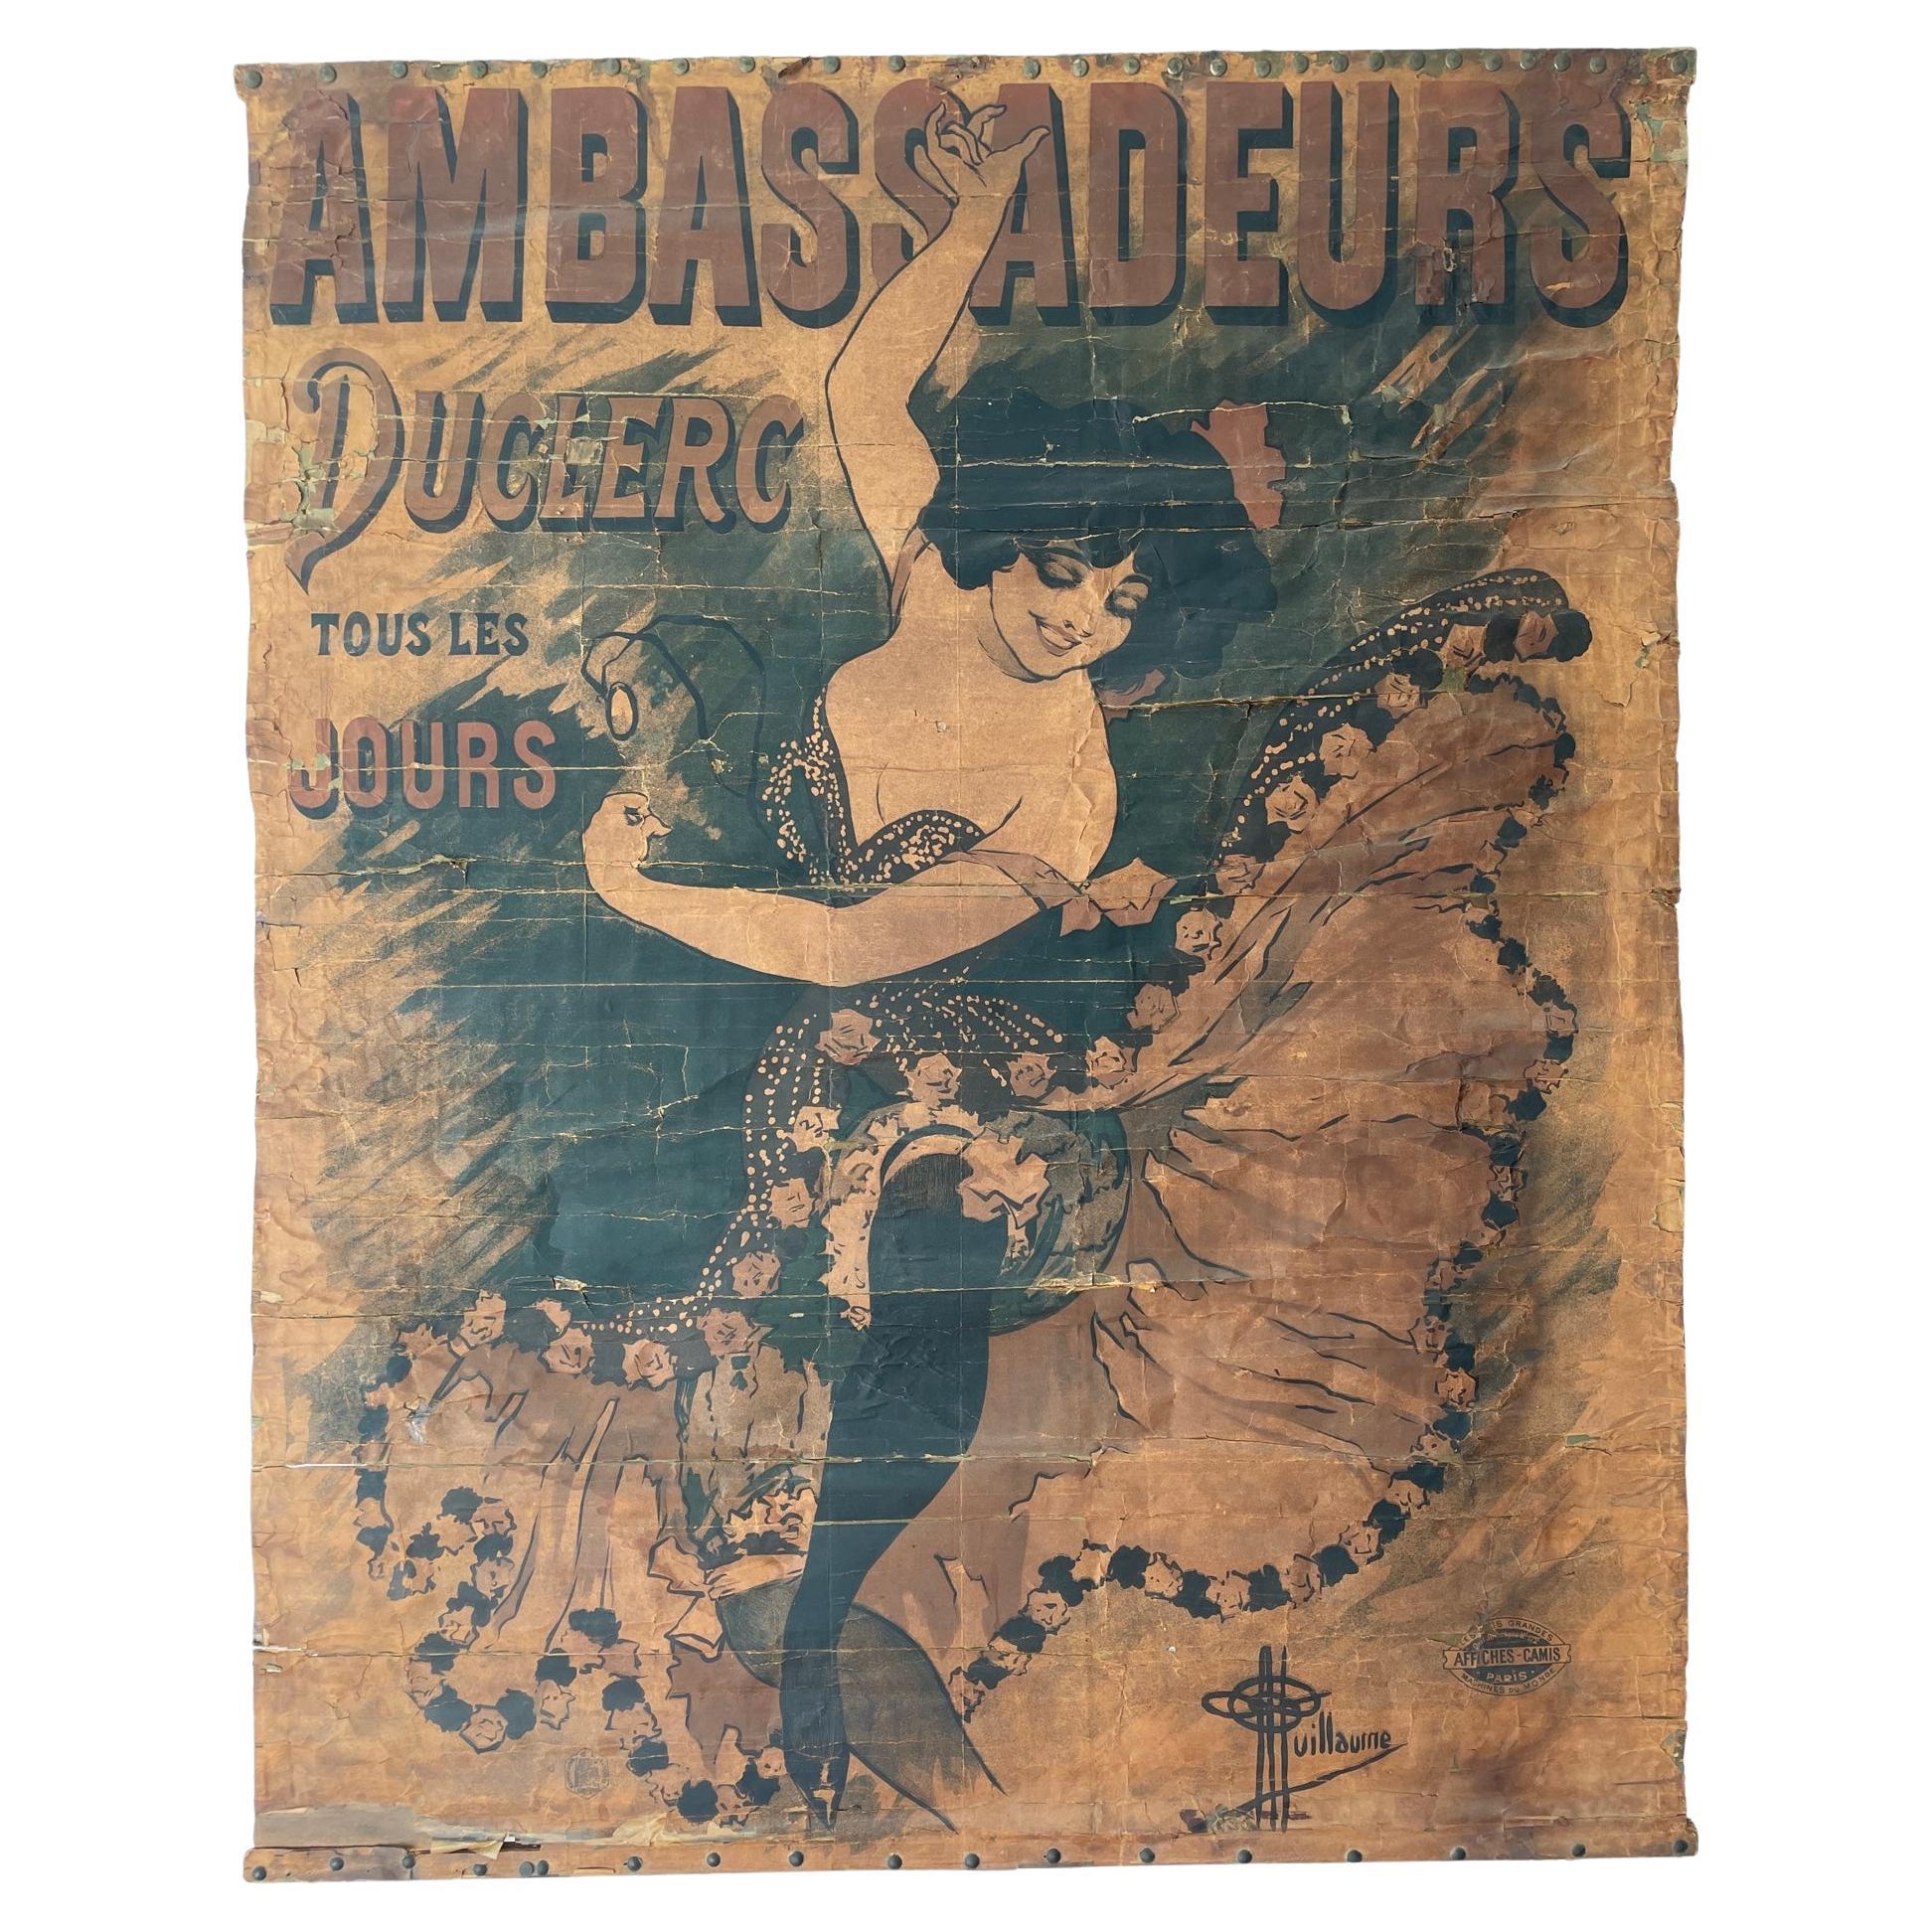 1894 Antike affiche / Poster Ambassadeurs Duclerc tous les jours - Guillaume im Angebot